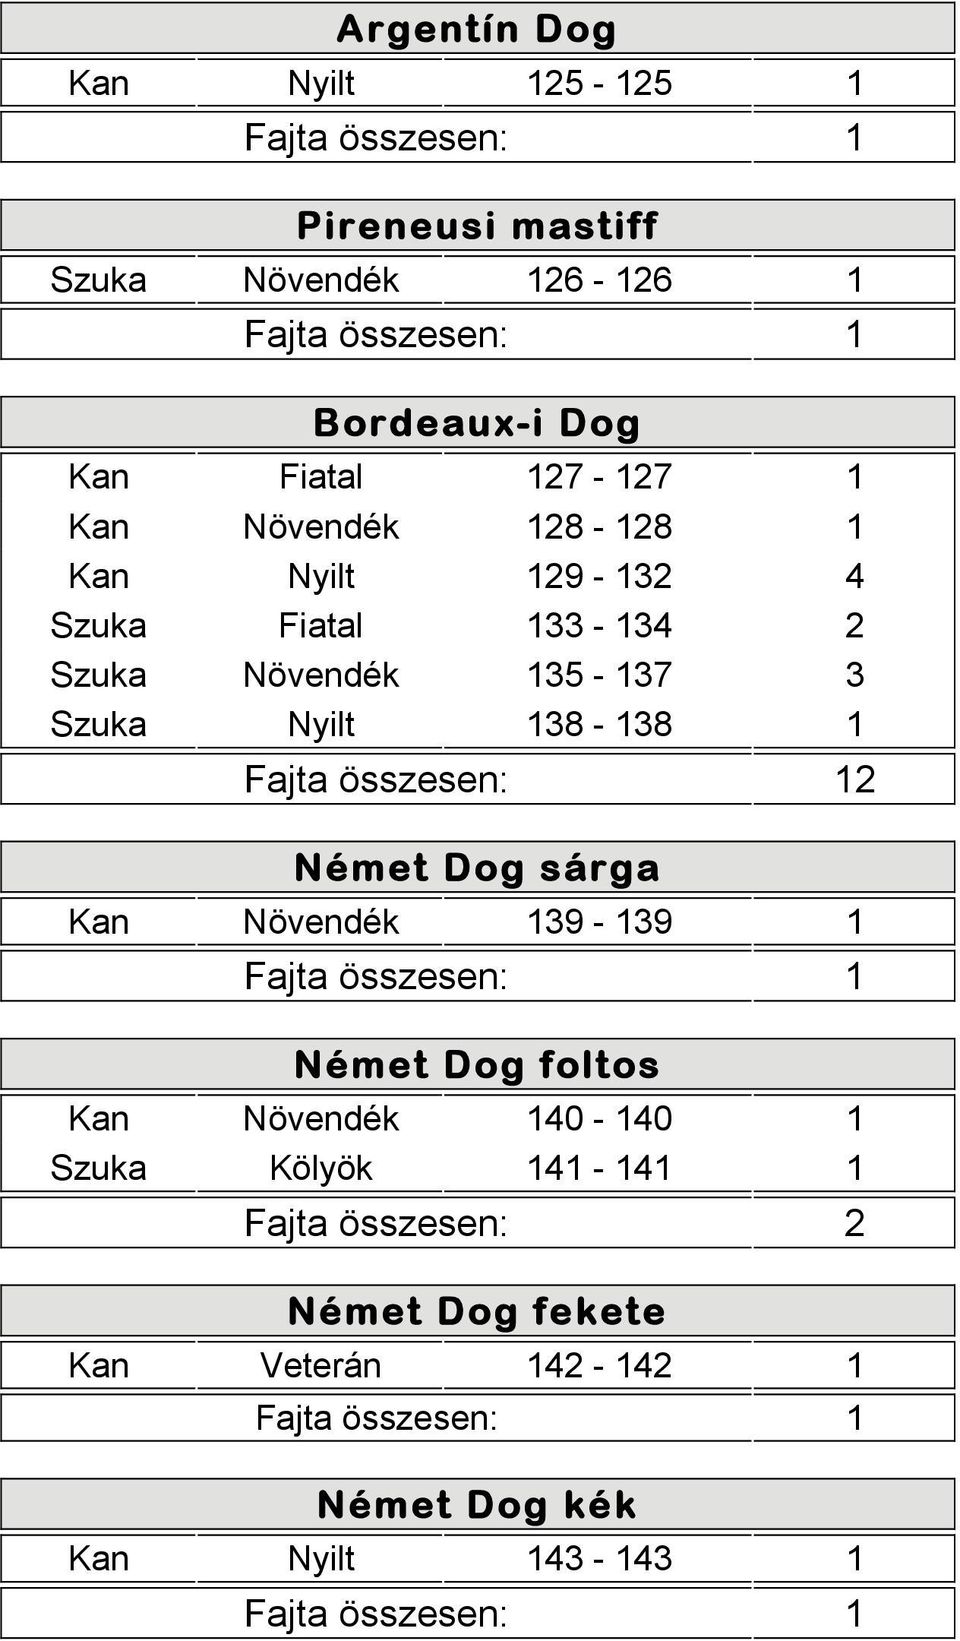 135-137 3 Szuka Nyilt 138-138 1 2 Német Dog sárga Kan Növendék 139-139 1 Német Dog foltos Kan